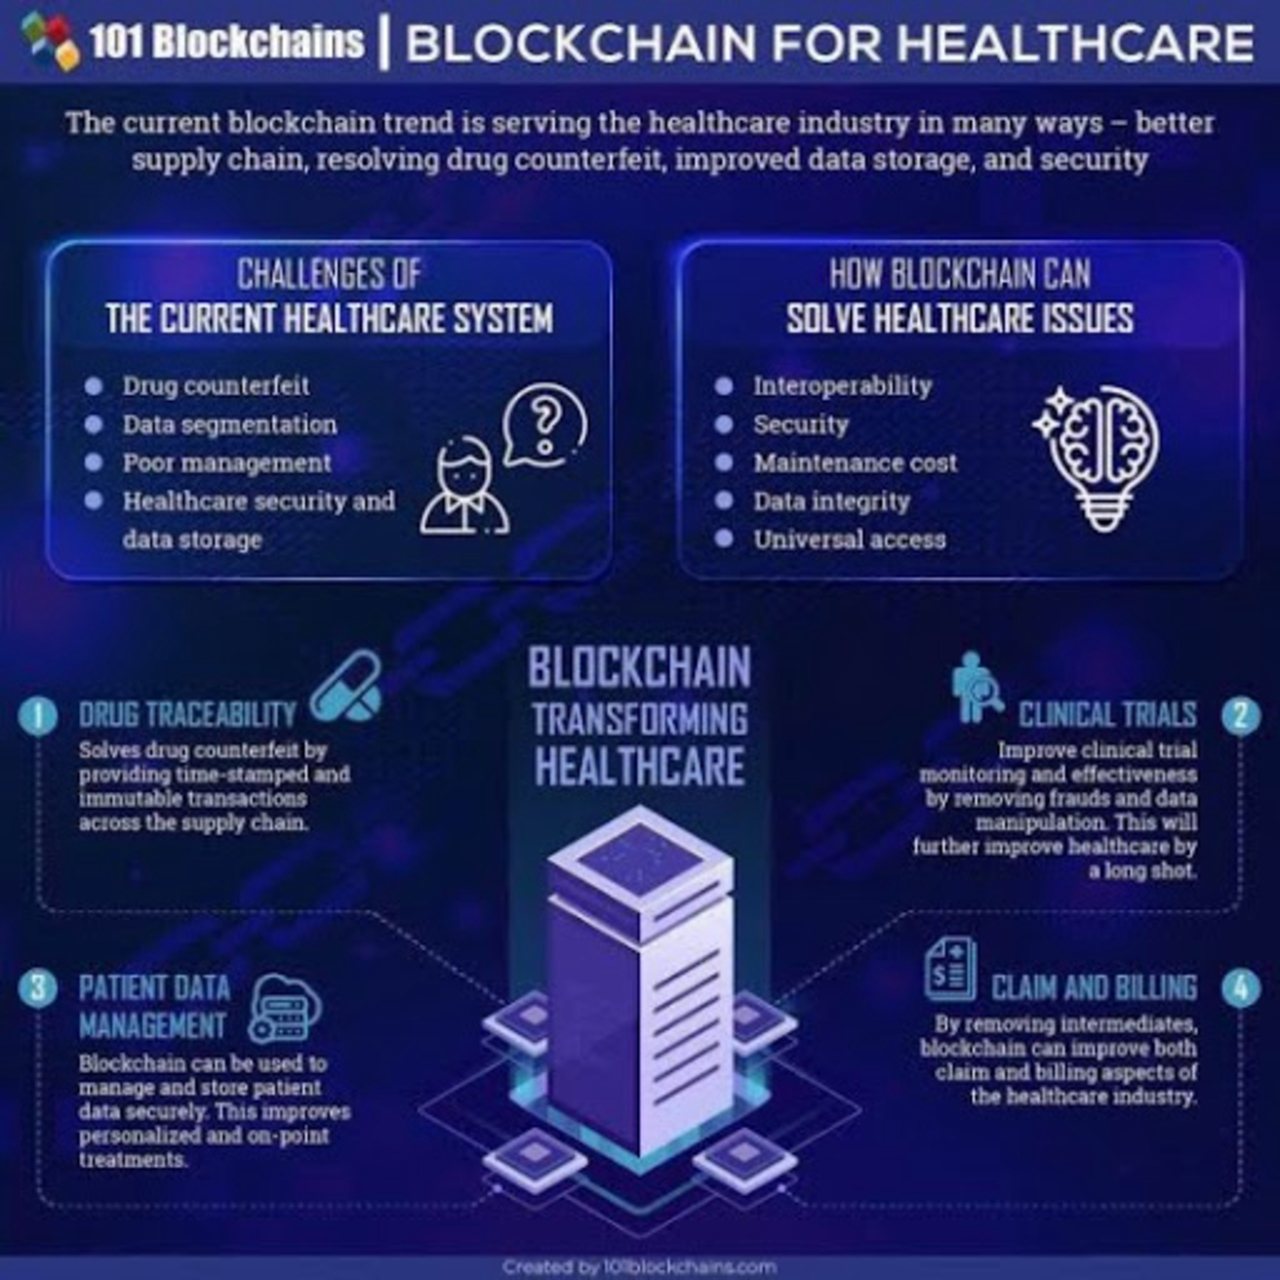 #Blockchain For #HealthCare by @101Blockchains #Tech #Technology #Marketing #HealthTech #Innovation #Influencer #IT Cc: @paula_piccard @ronald_vanloon @mhiesboeck @marketbuildr @guzmannutrition https://t.co/RUUKwvWenA